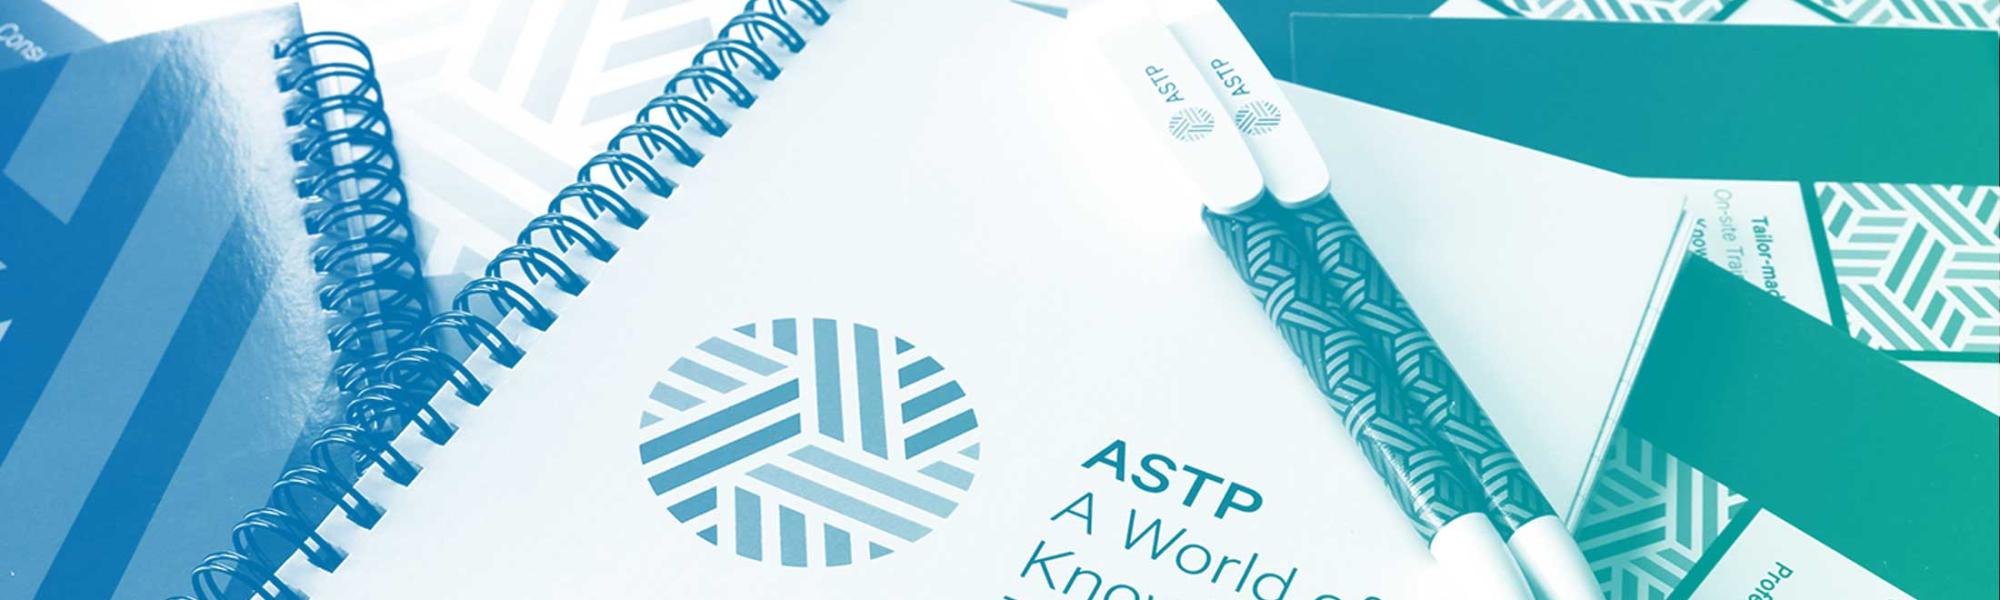 ASTP - Communications and Marketing Internship